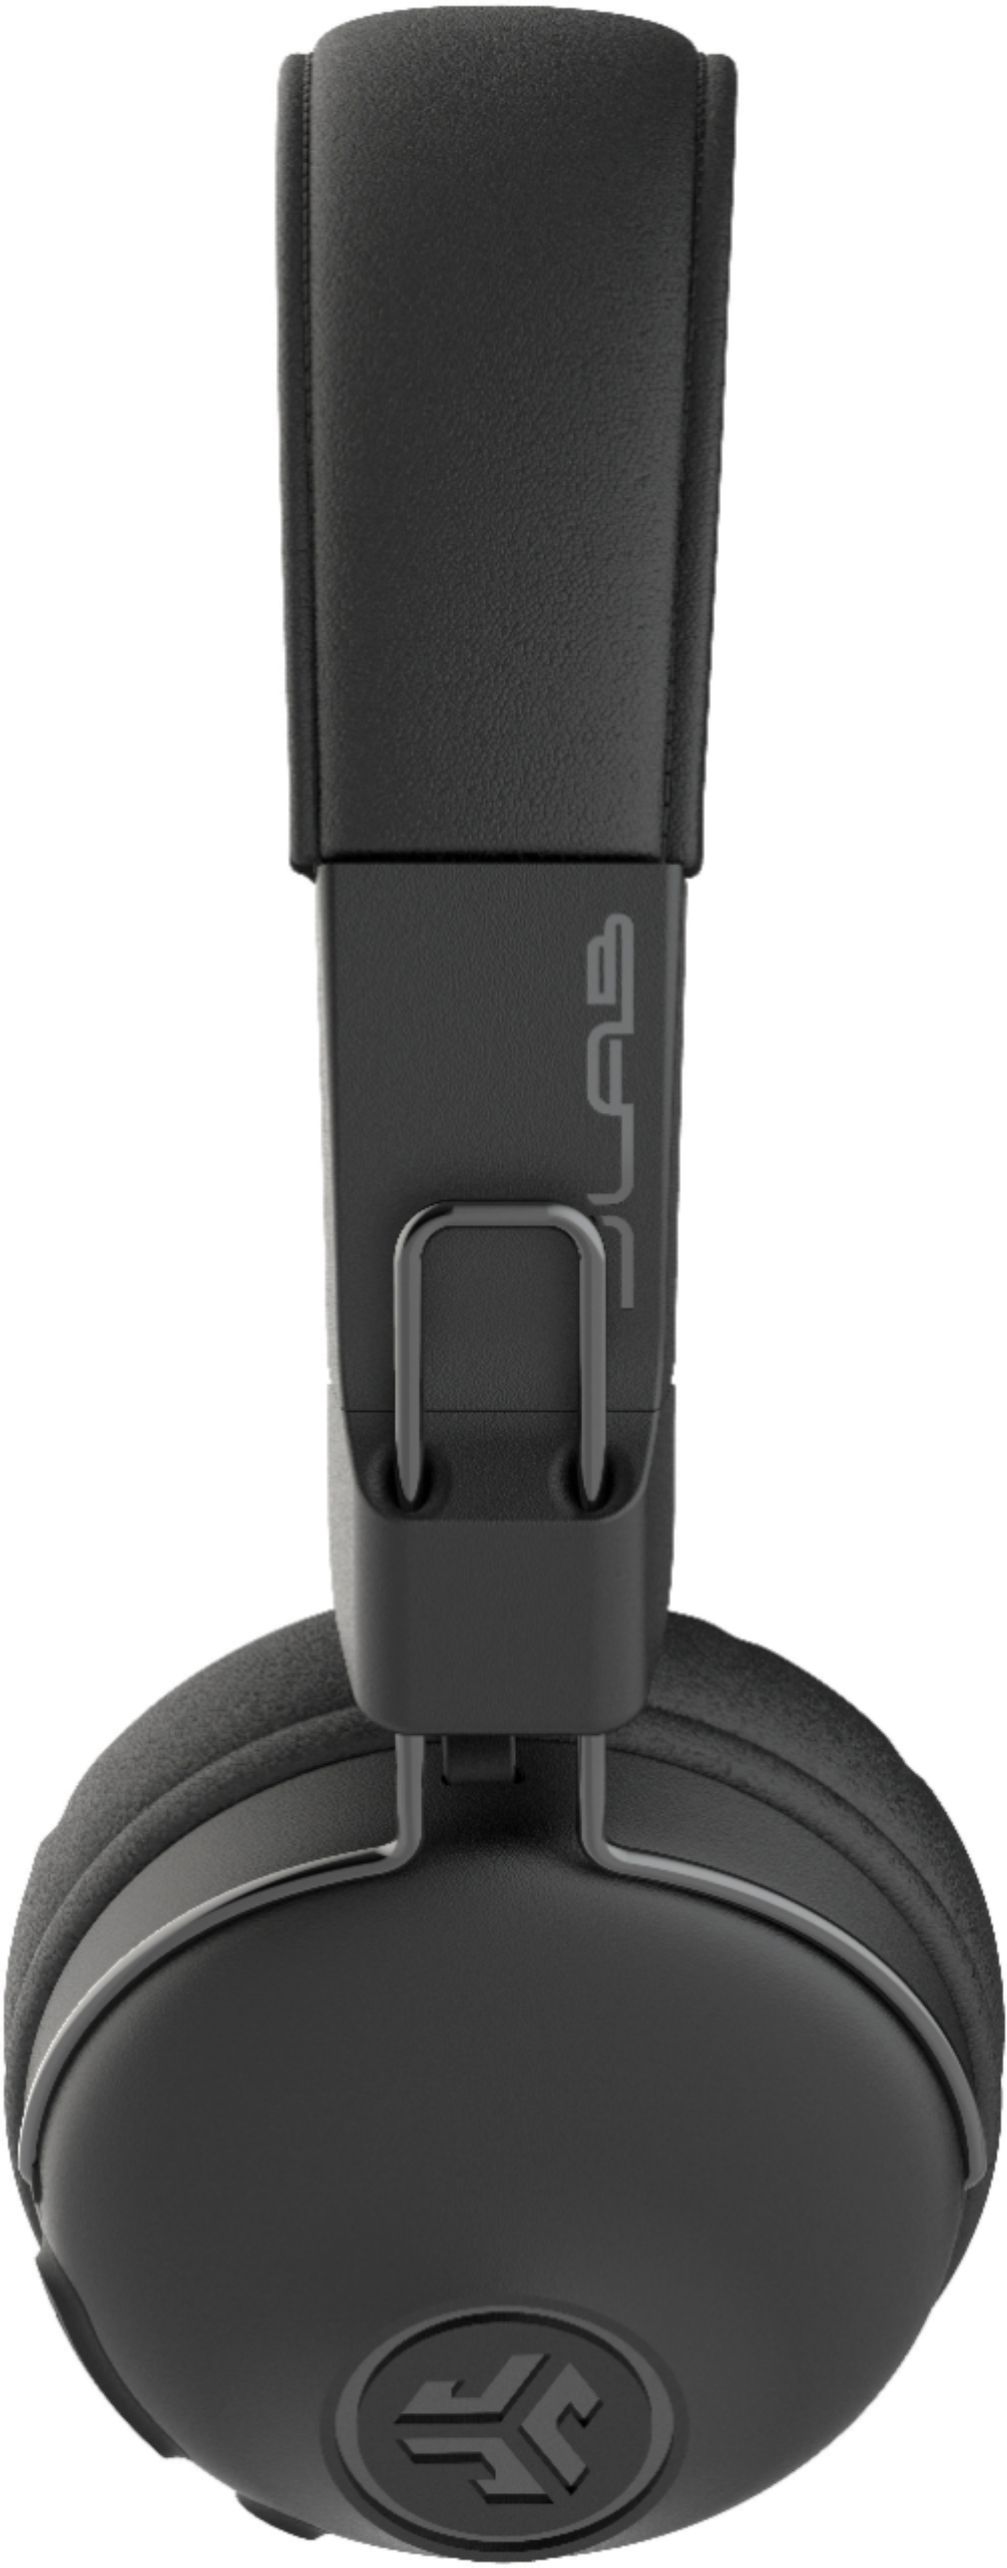 jlab studio wireless headphones